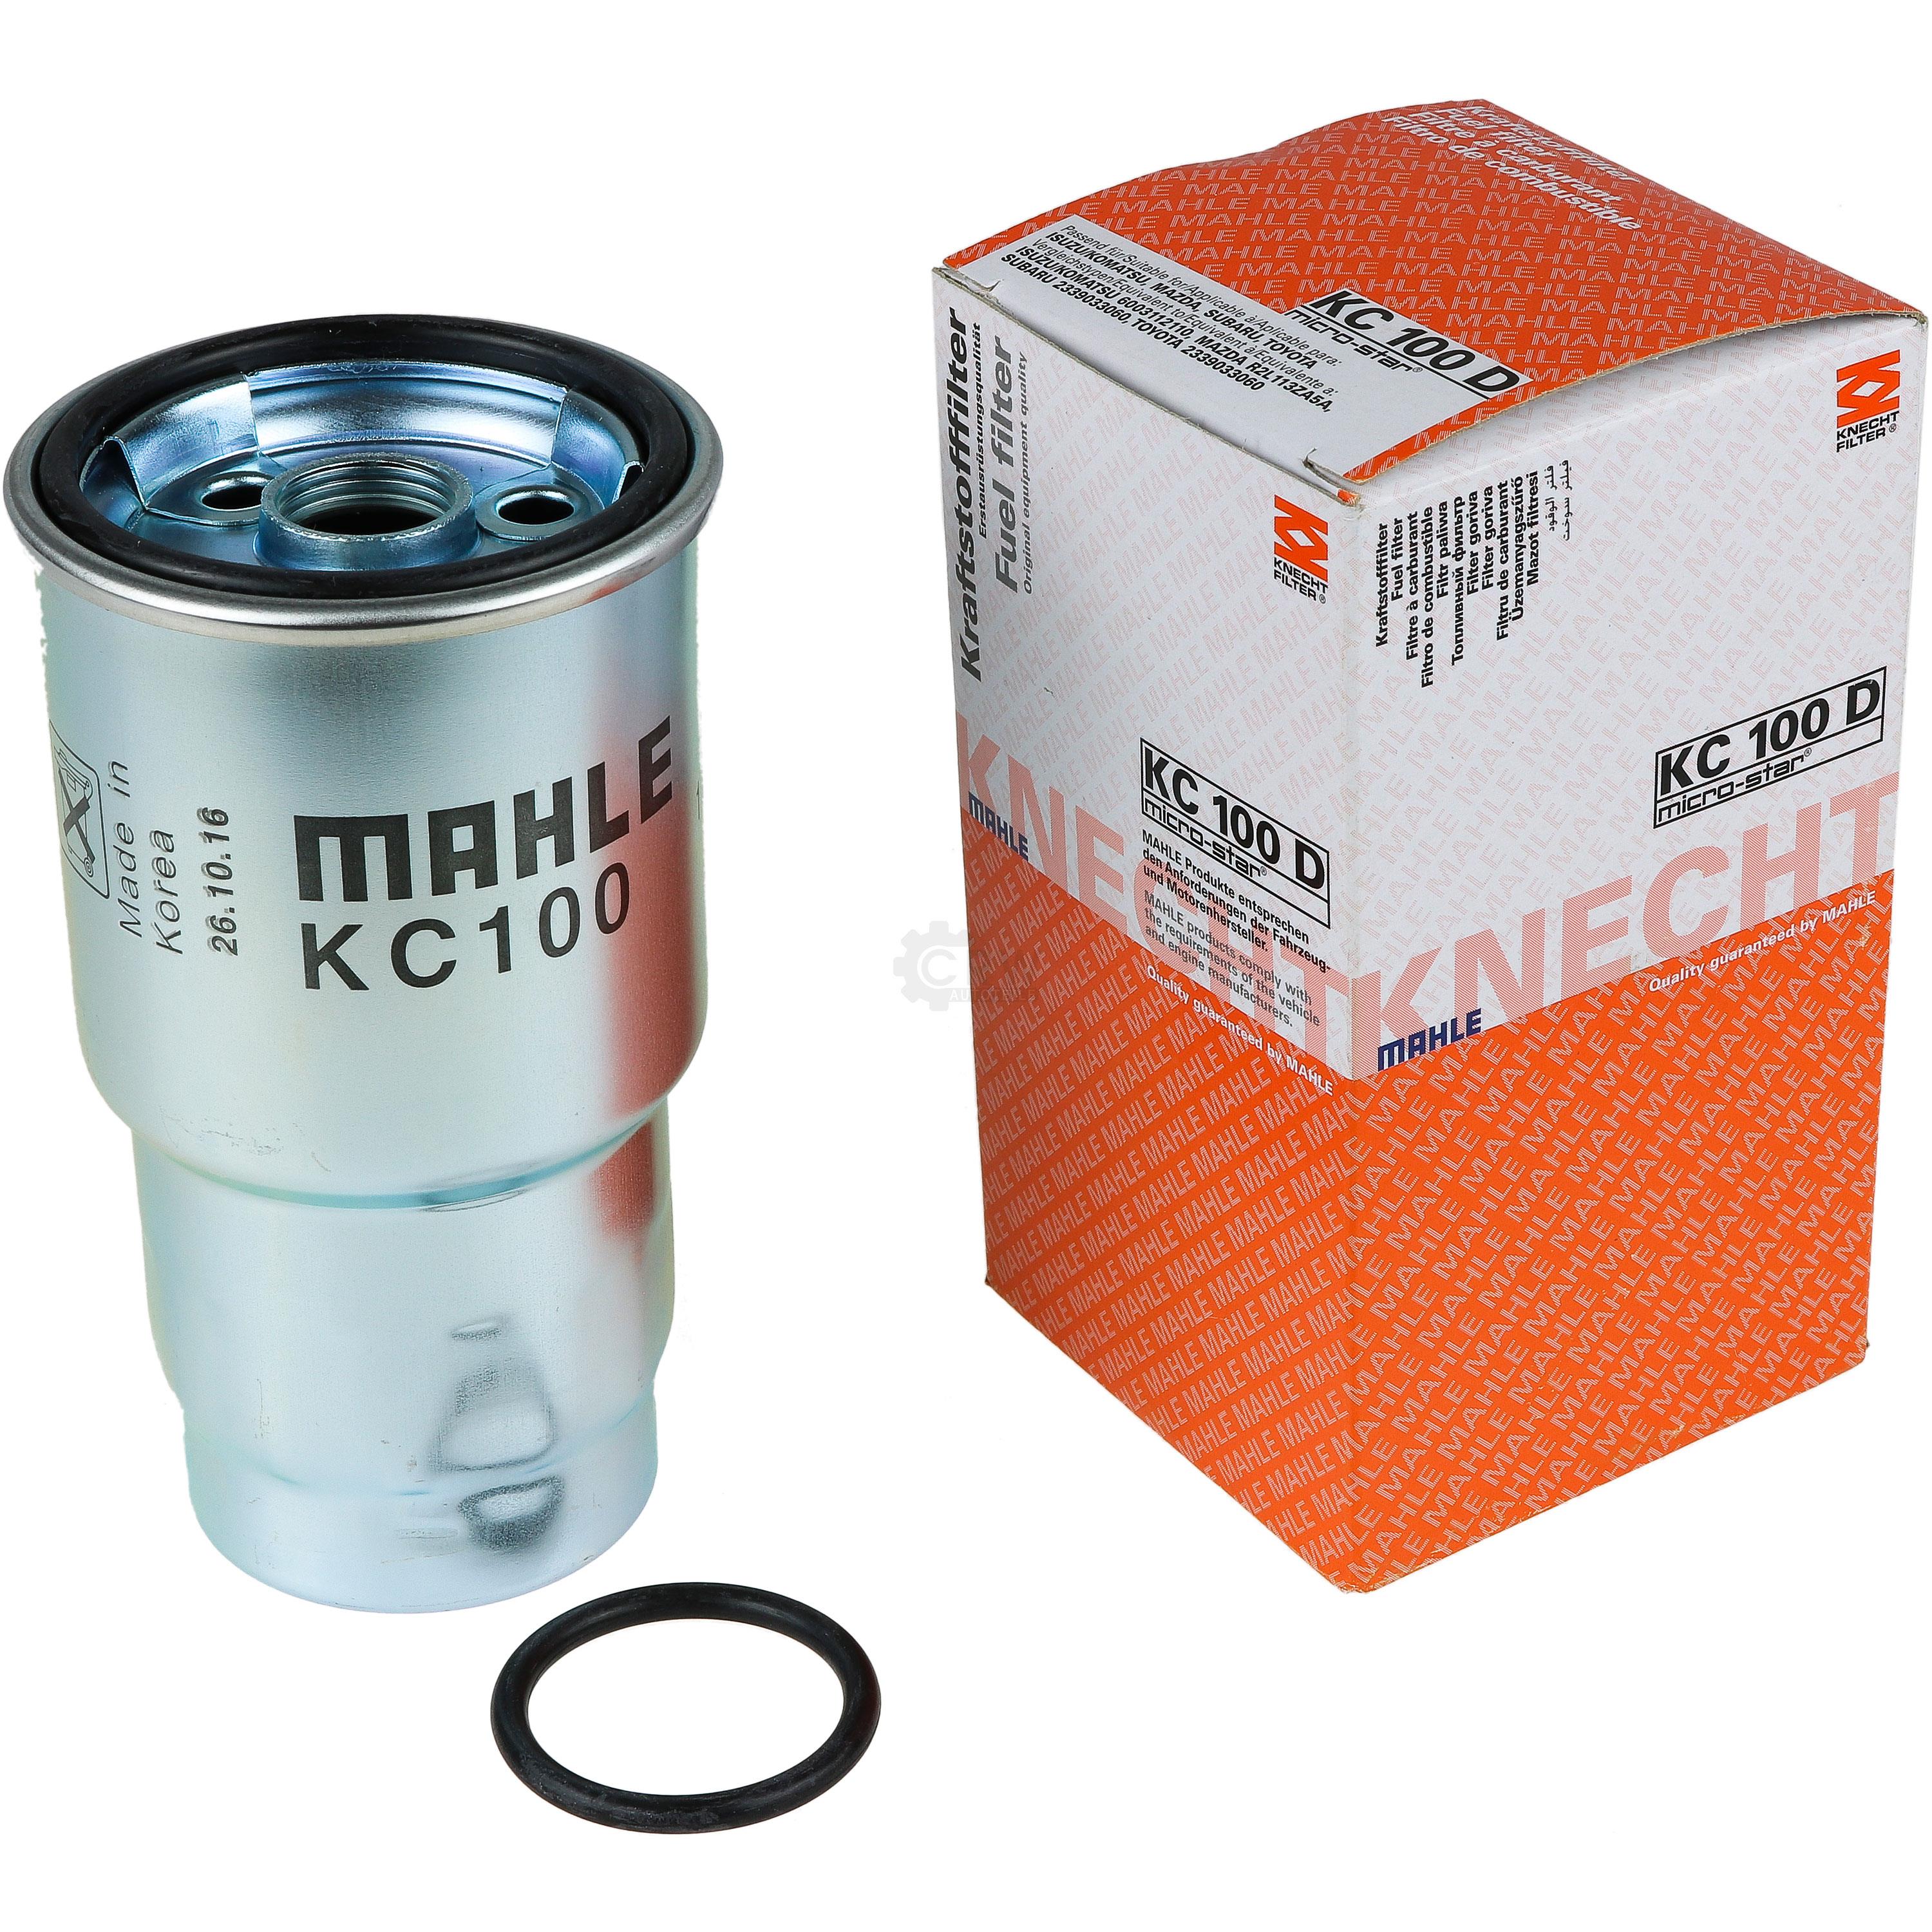 MAHLE / KNECHT Kraftstofffilter KC 100D Fuel Filter